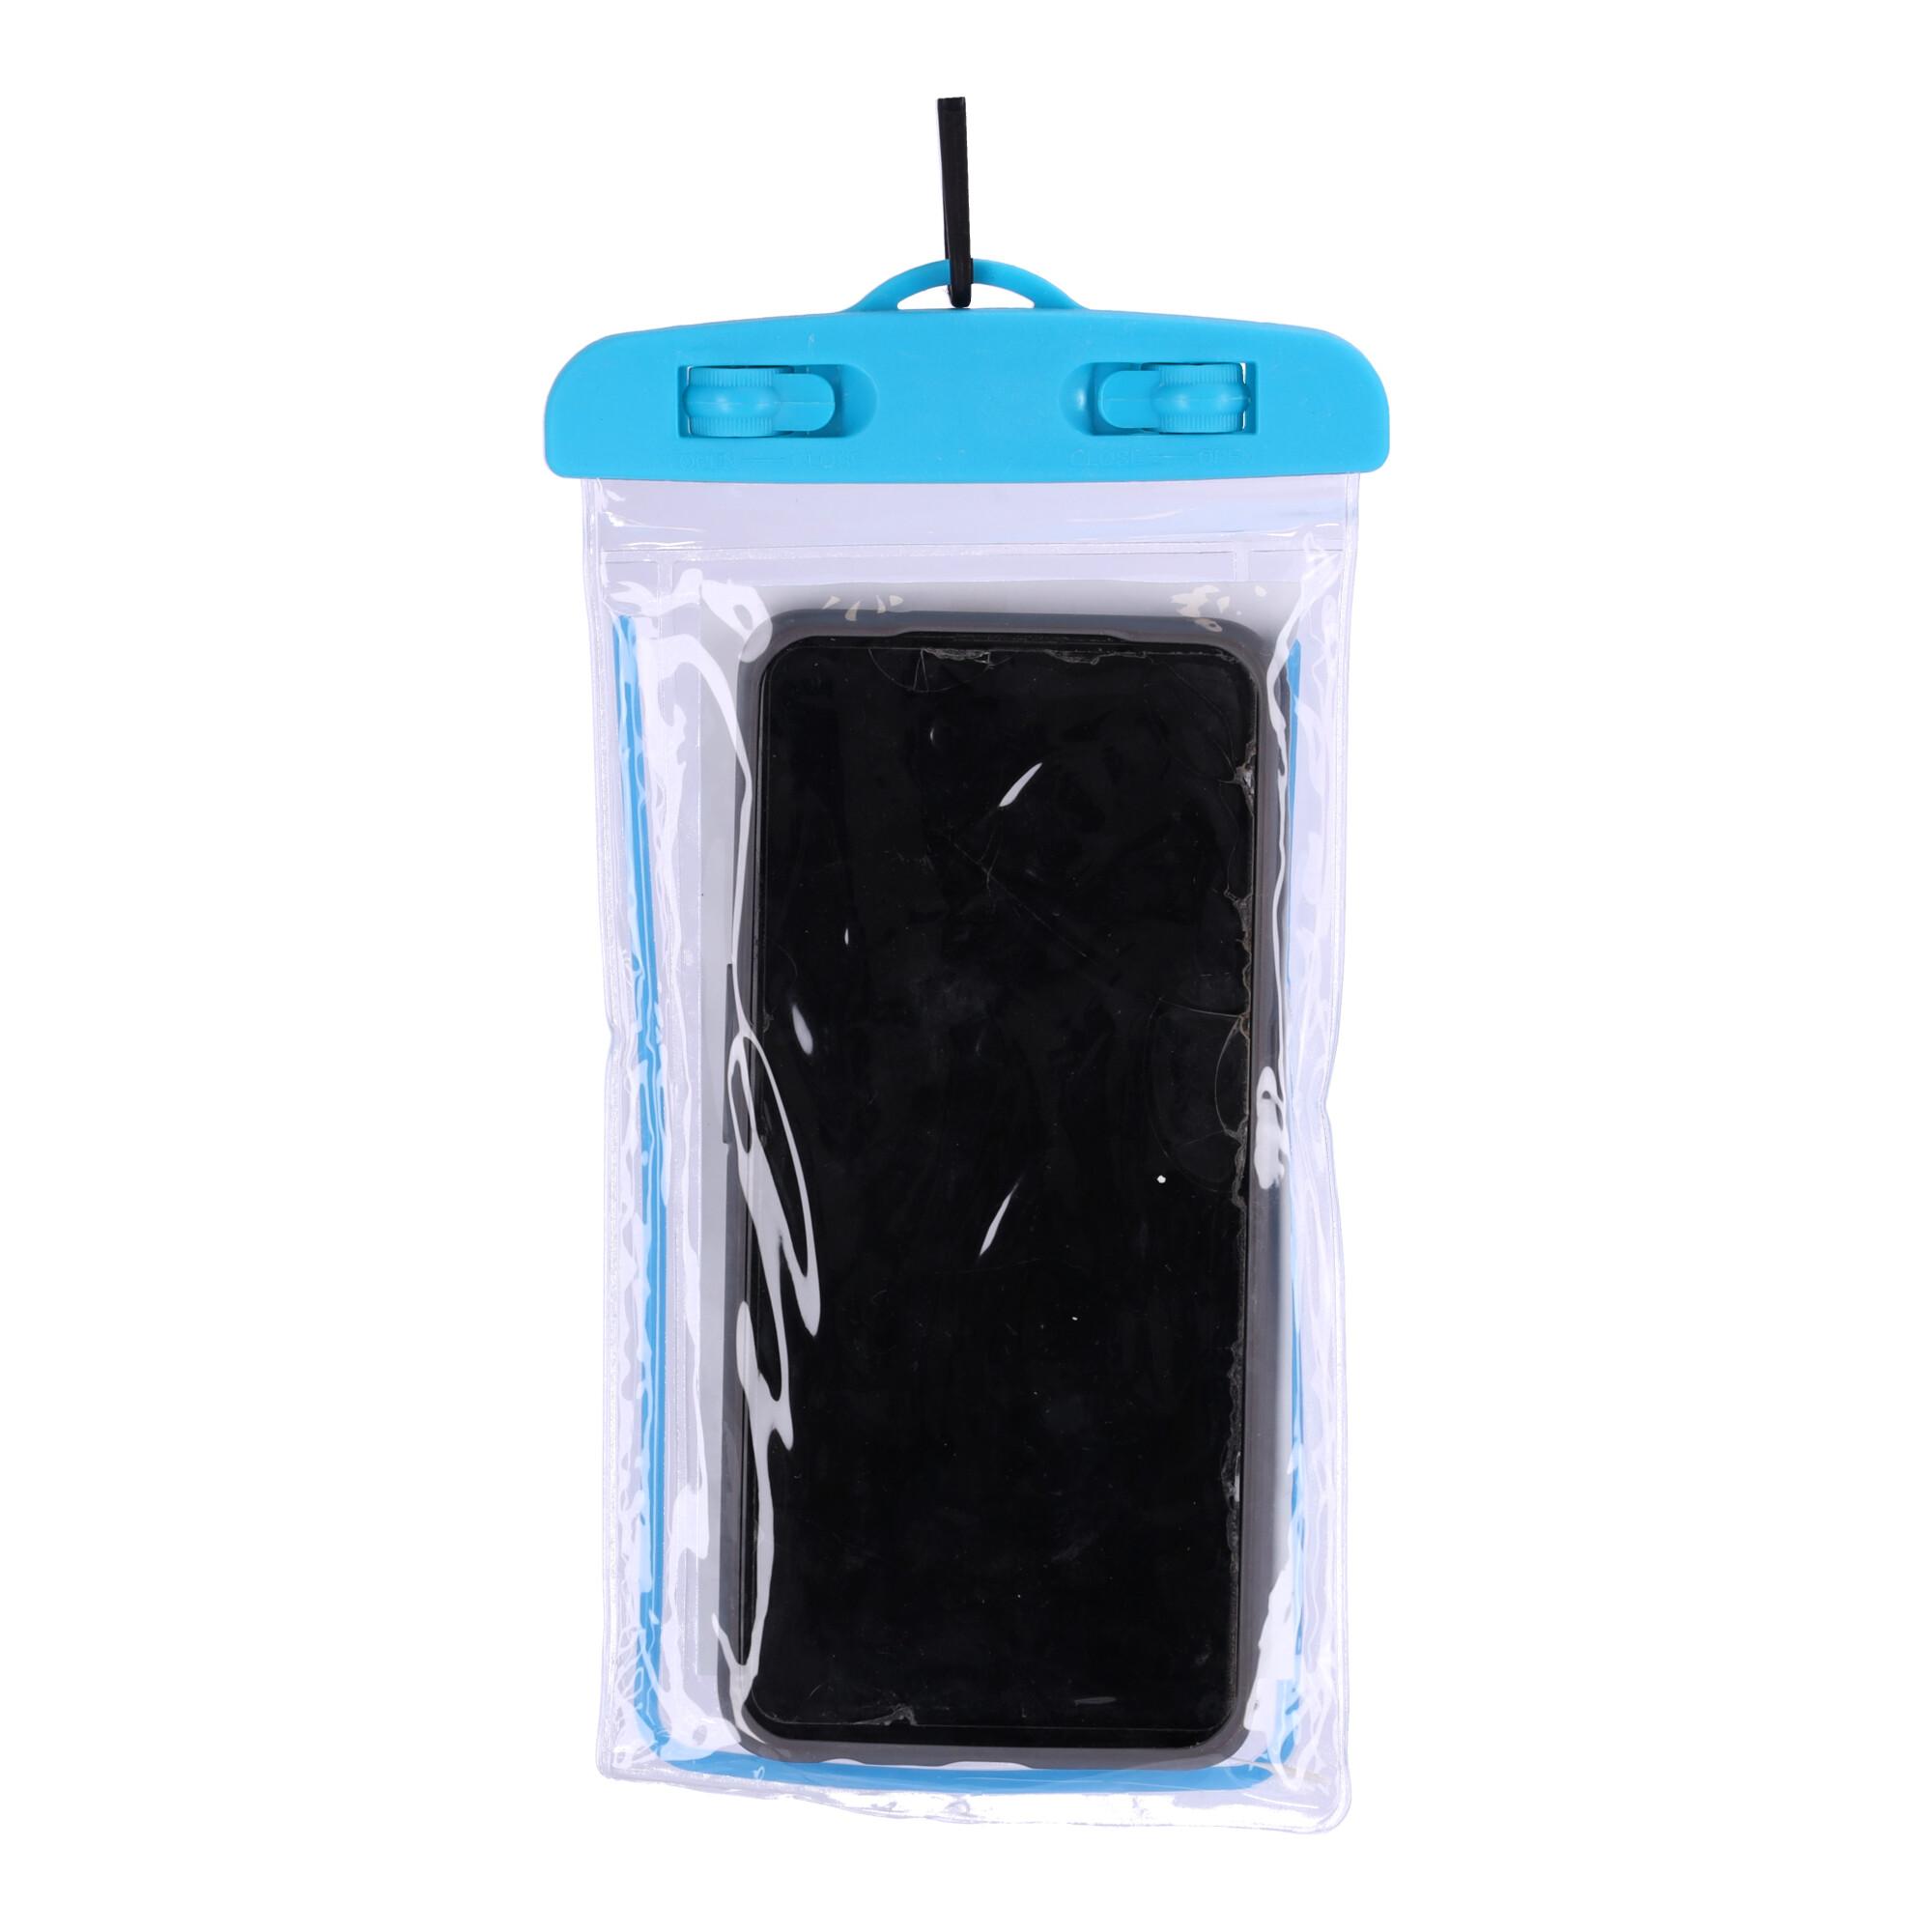 Waterproof universal case, phone cover - blue